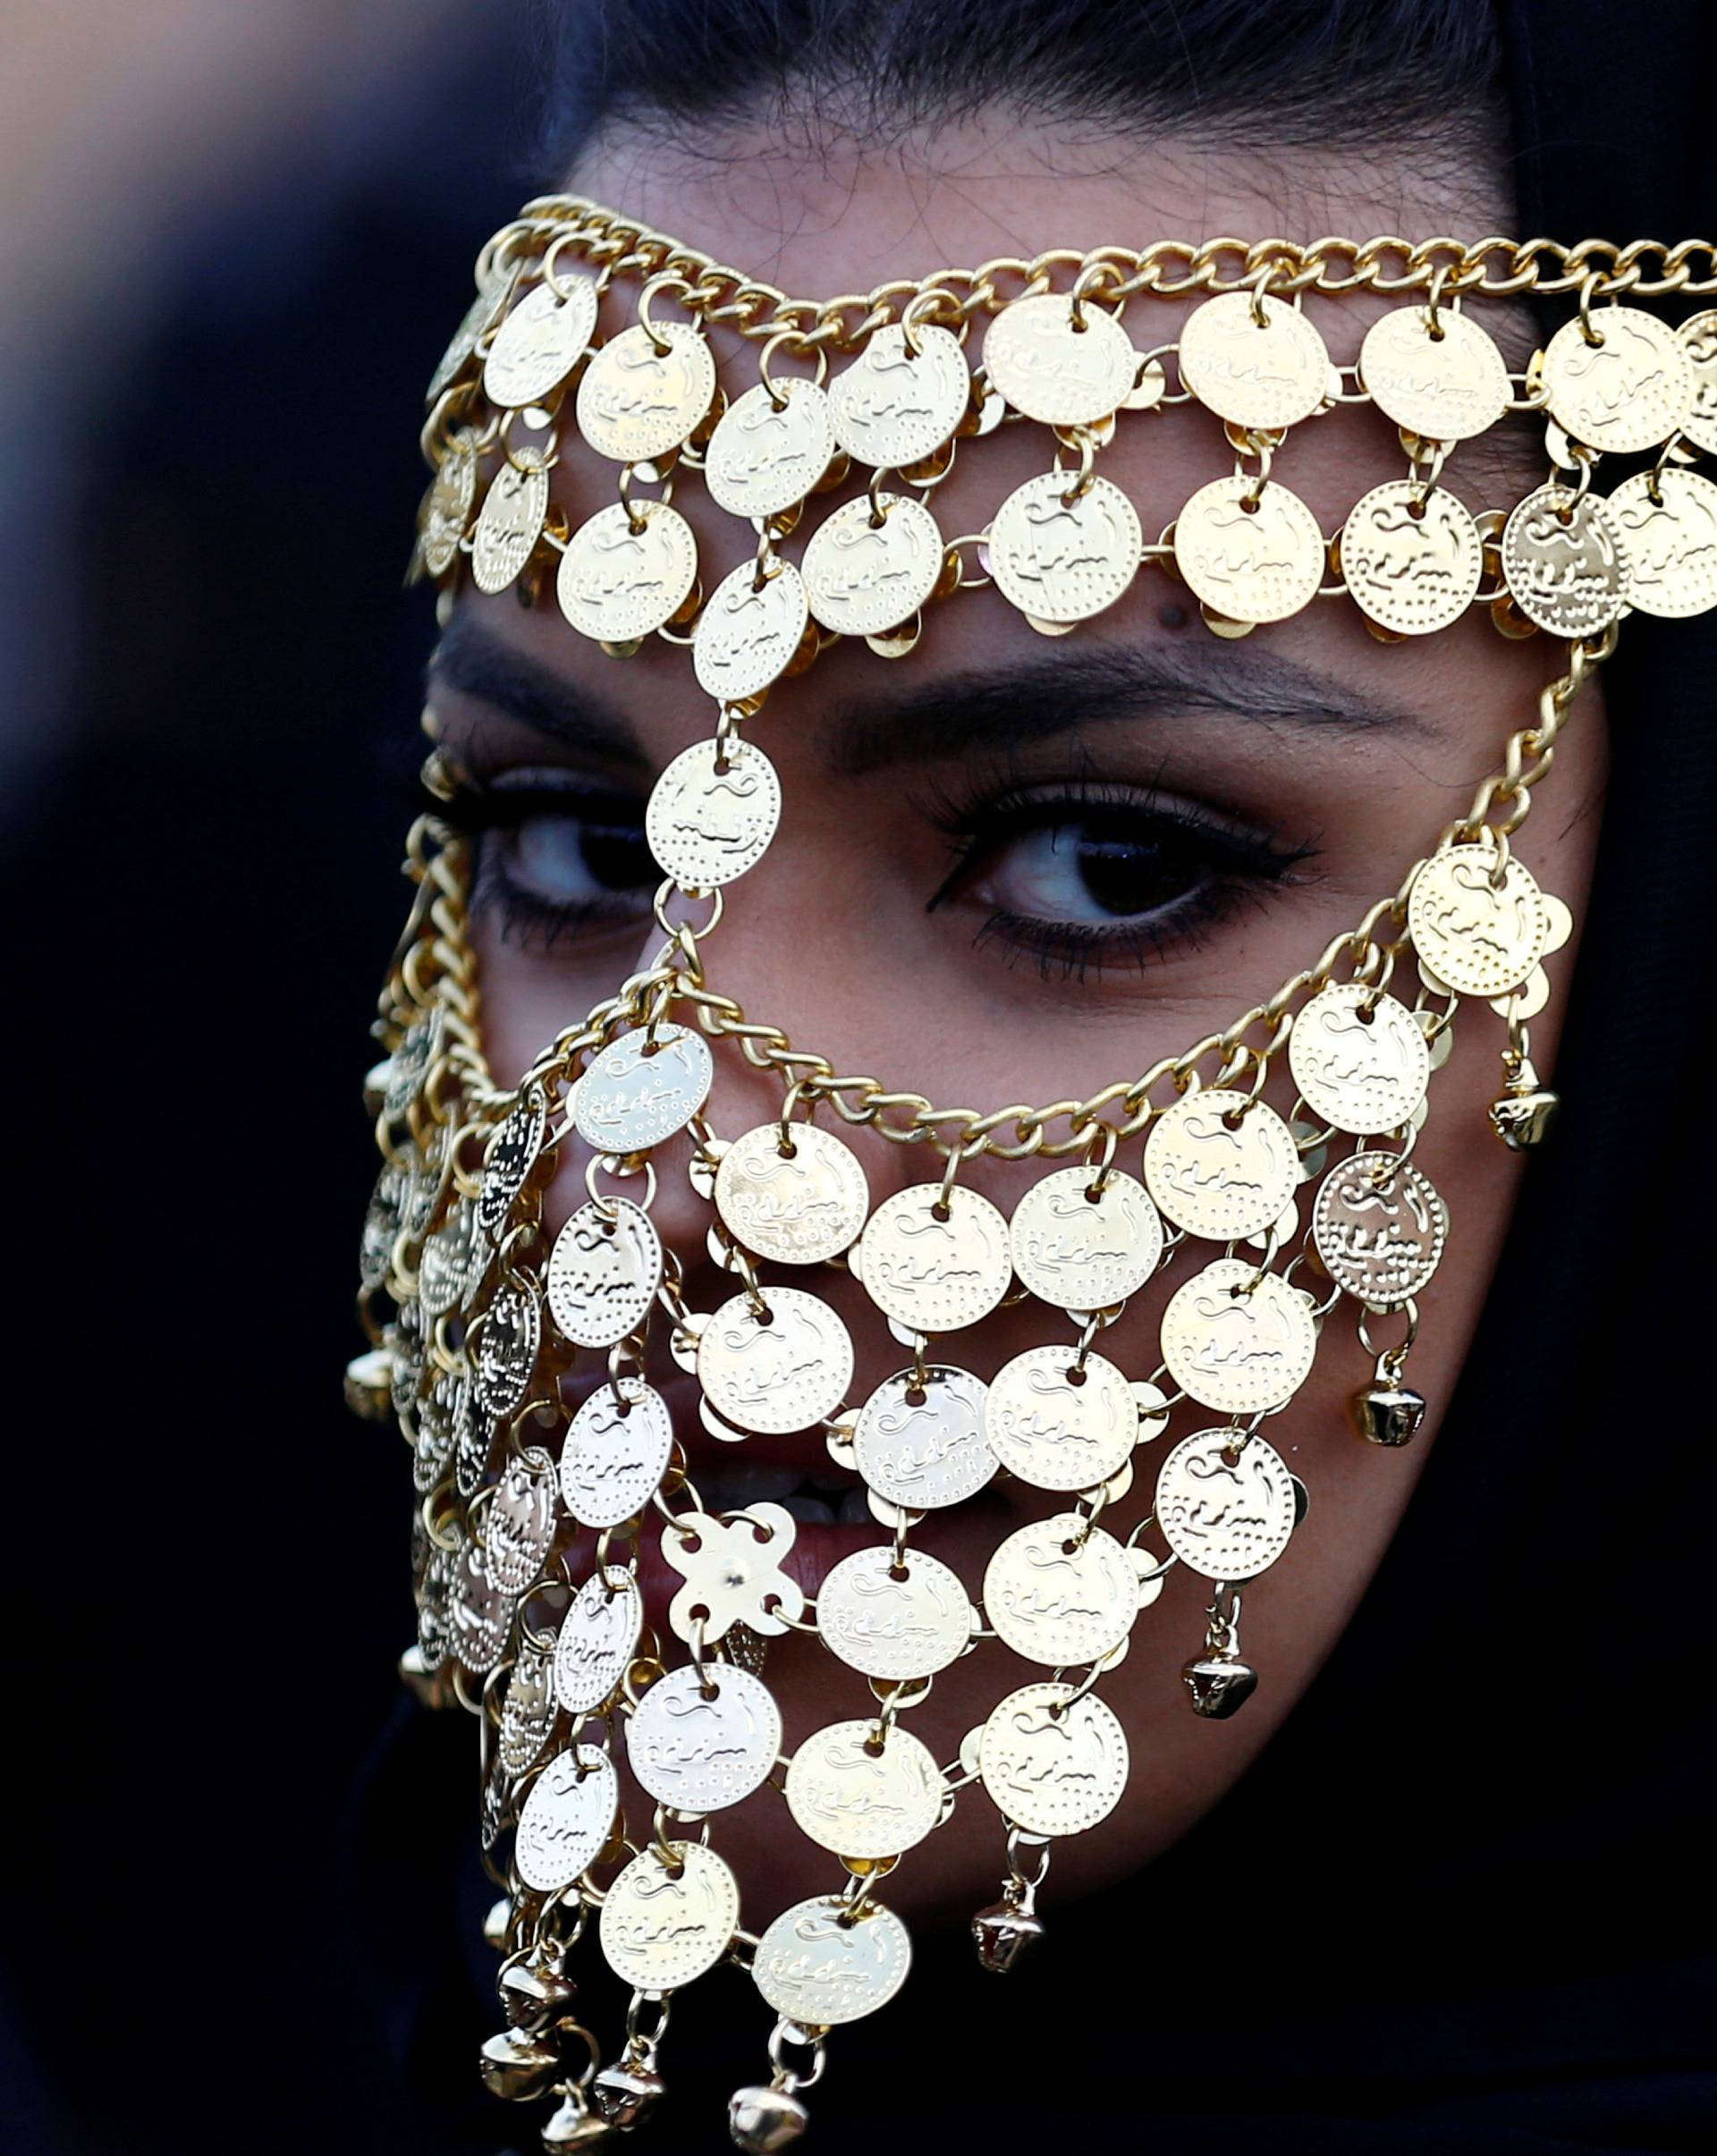 Woman attends Janadriyah Cultural Festival on the outskirts of Riyadh